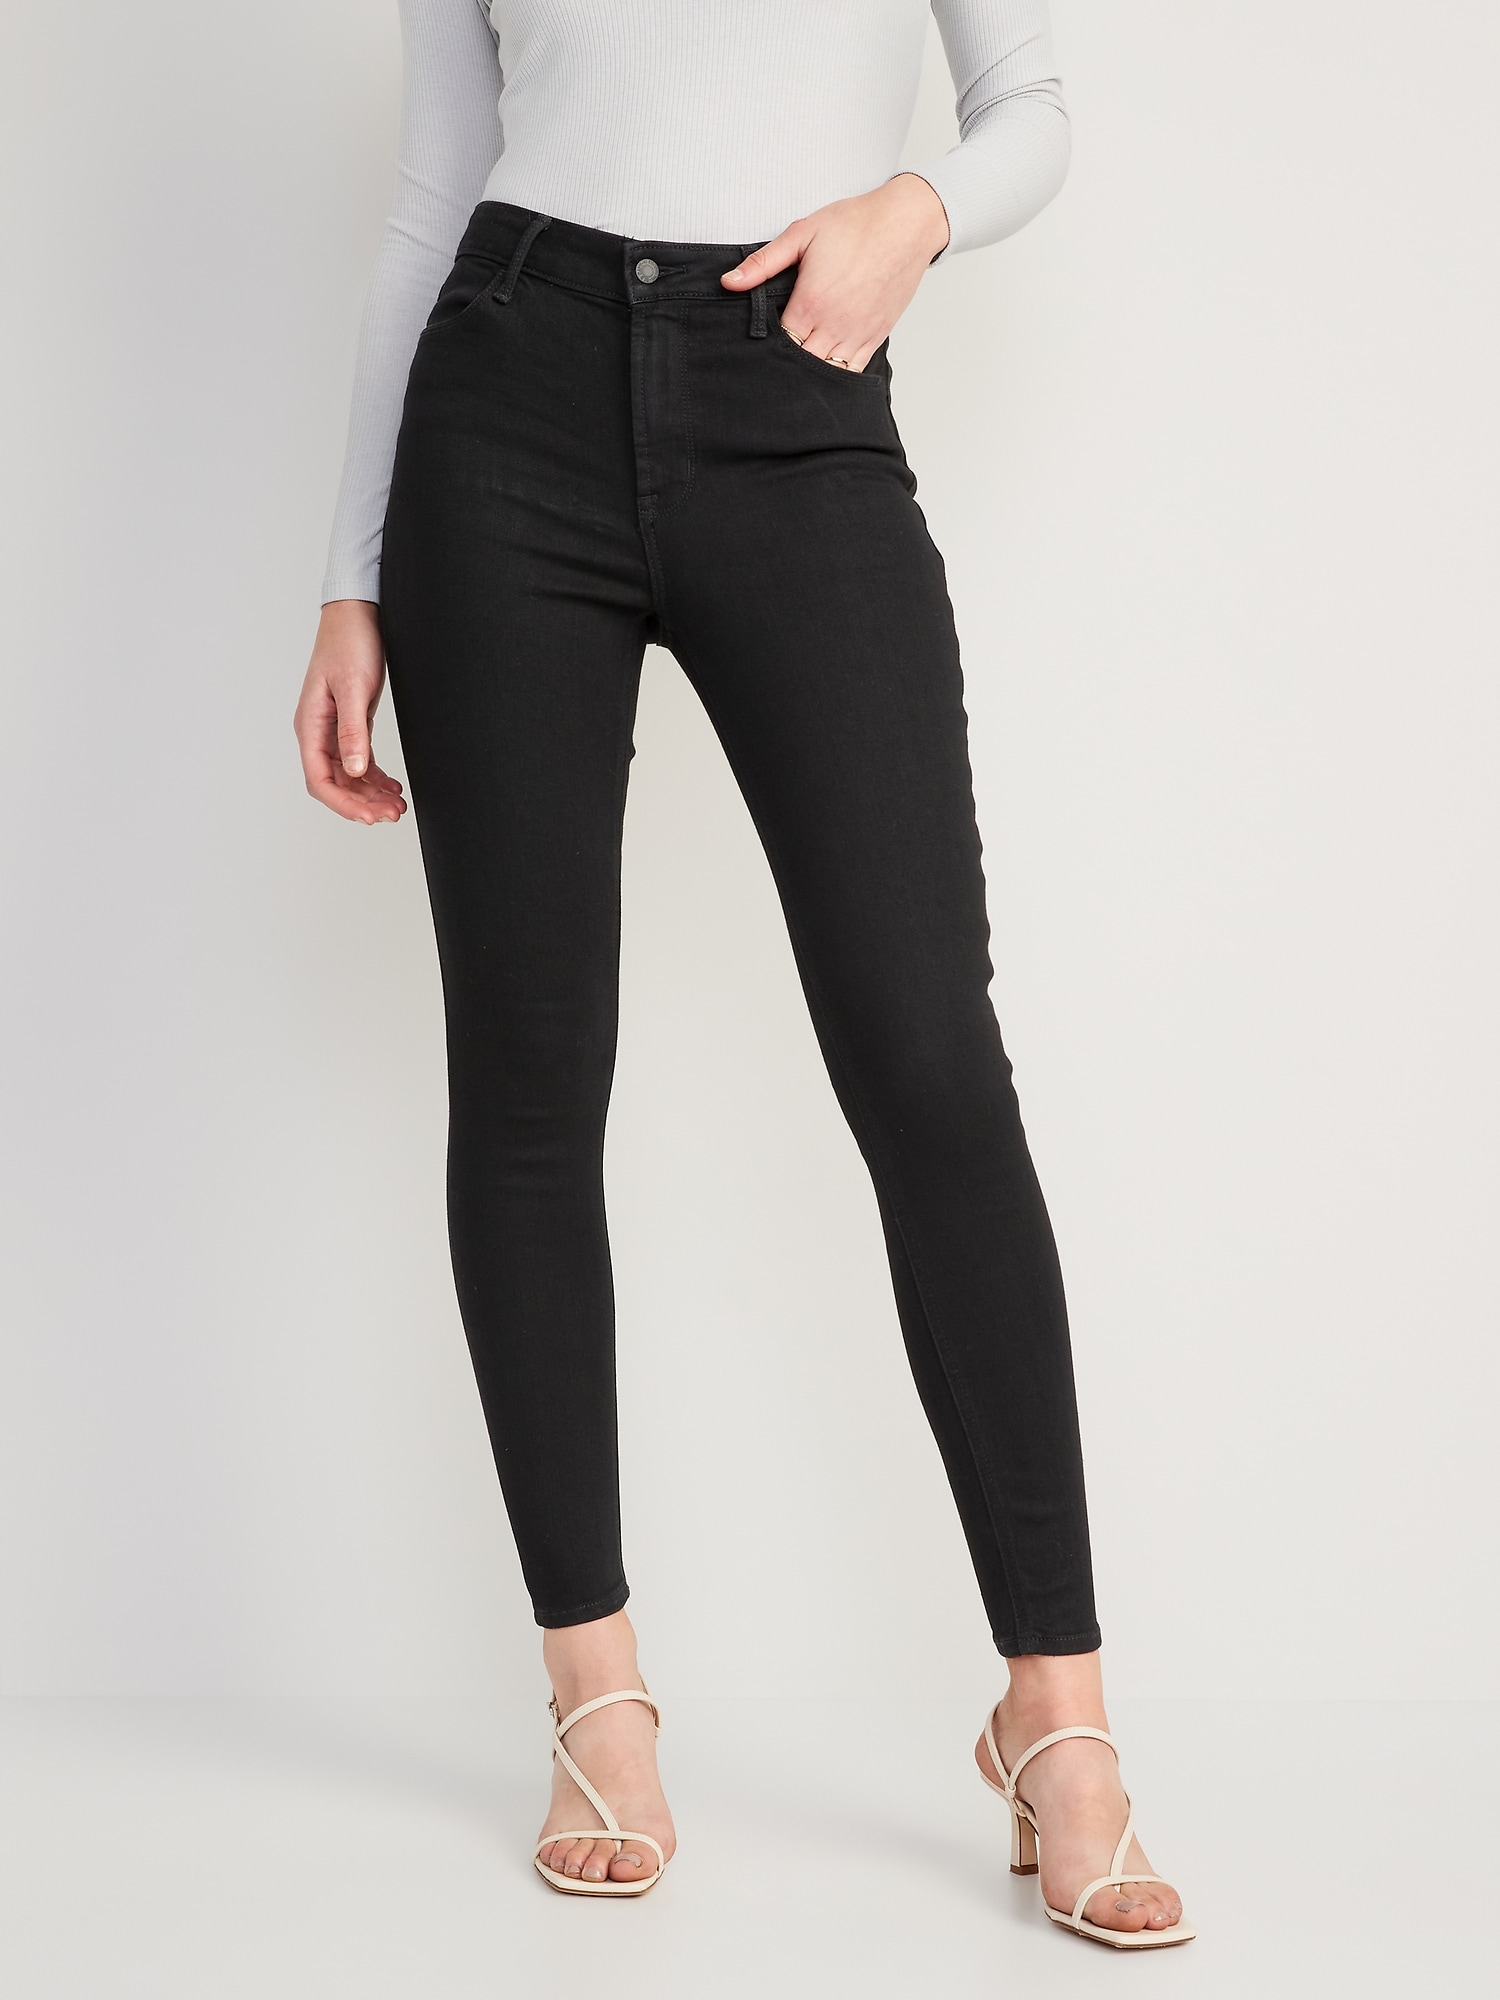 Speels poeder Kelder High-Waisted Wow Super-Skinny Black Jeans for Women | Old Navy